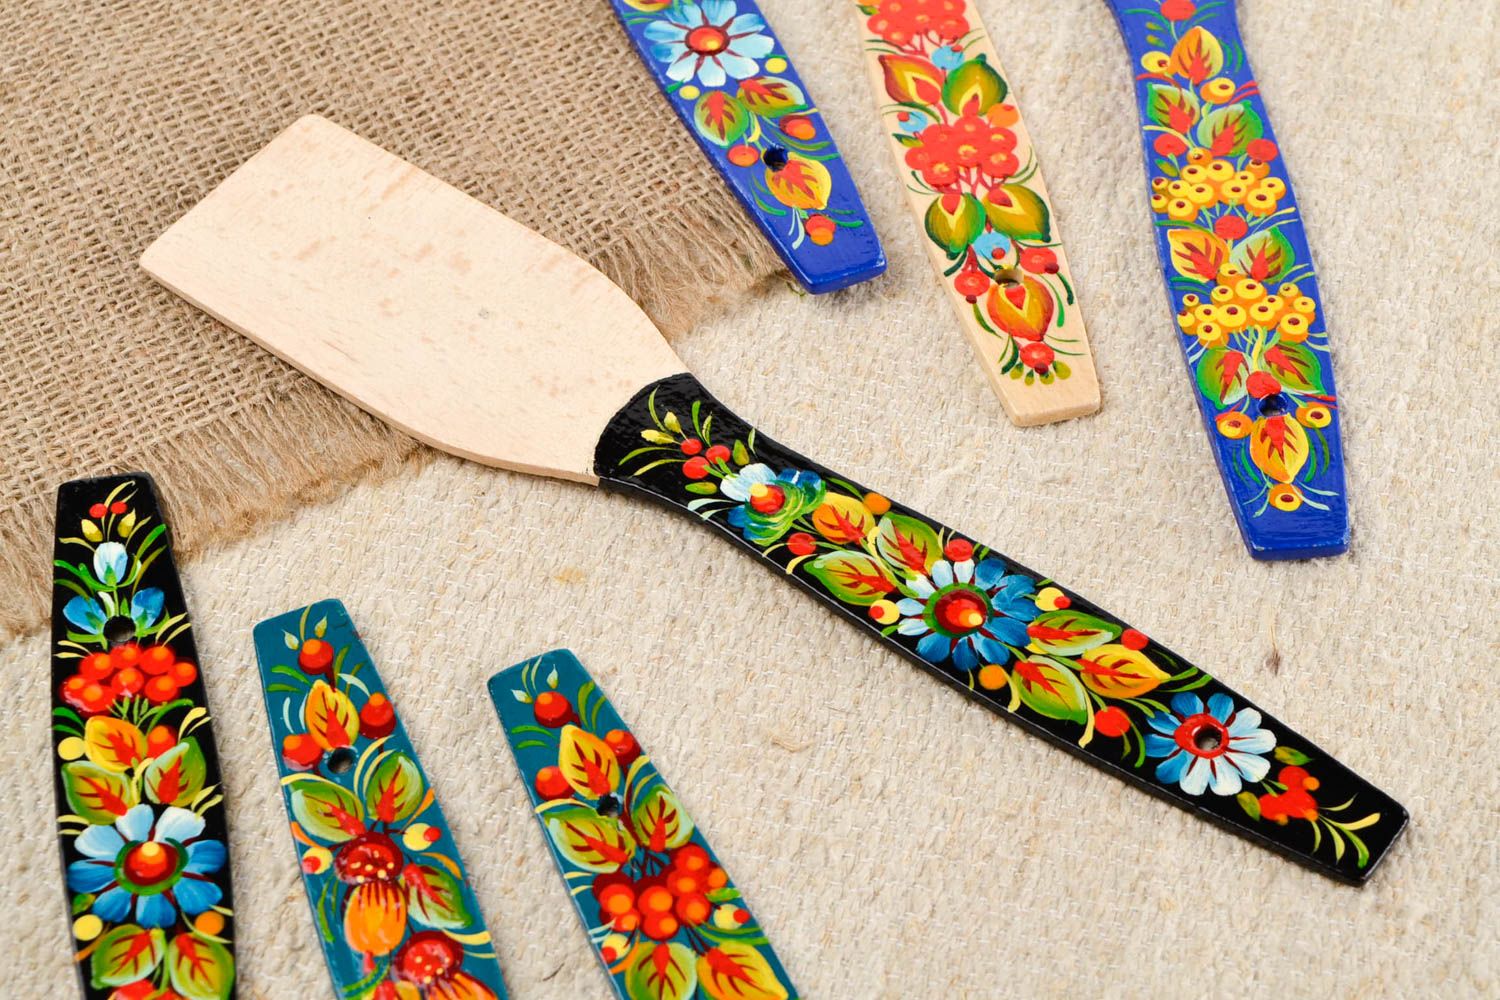 Handmade spatula designer spatula wooden kitchen utensils unusual gift ideas  photo 1